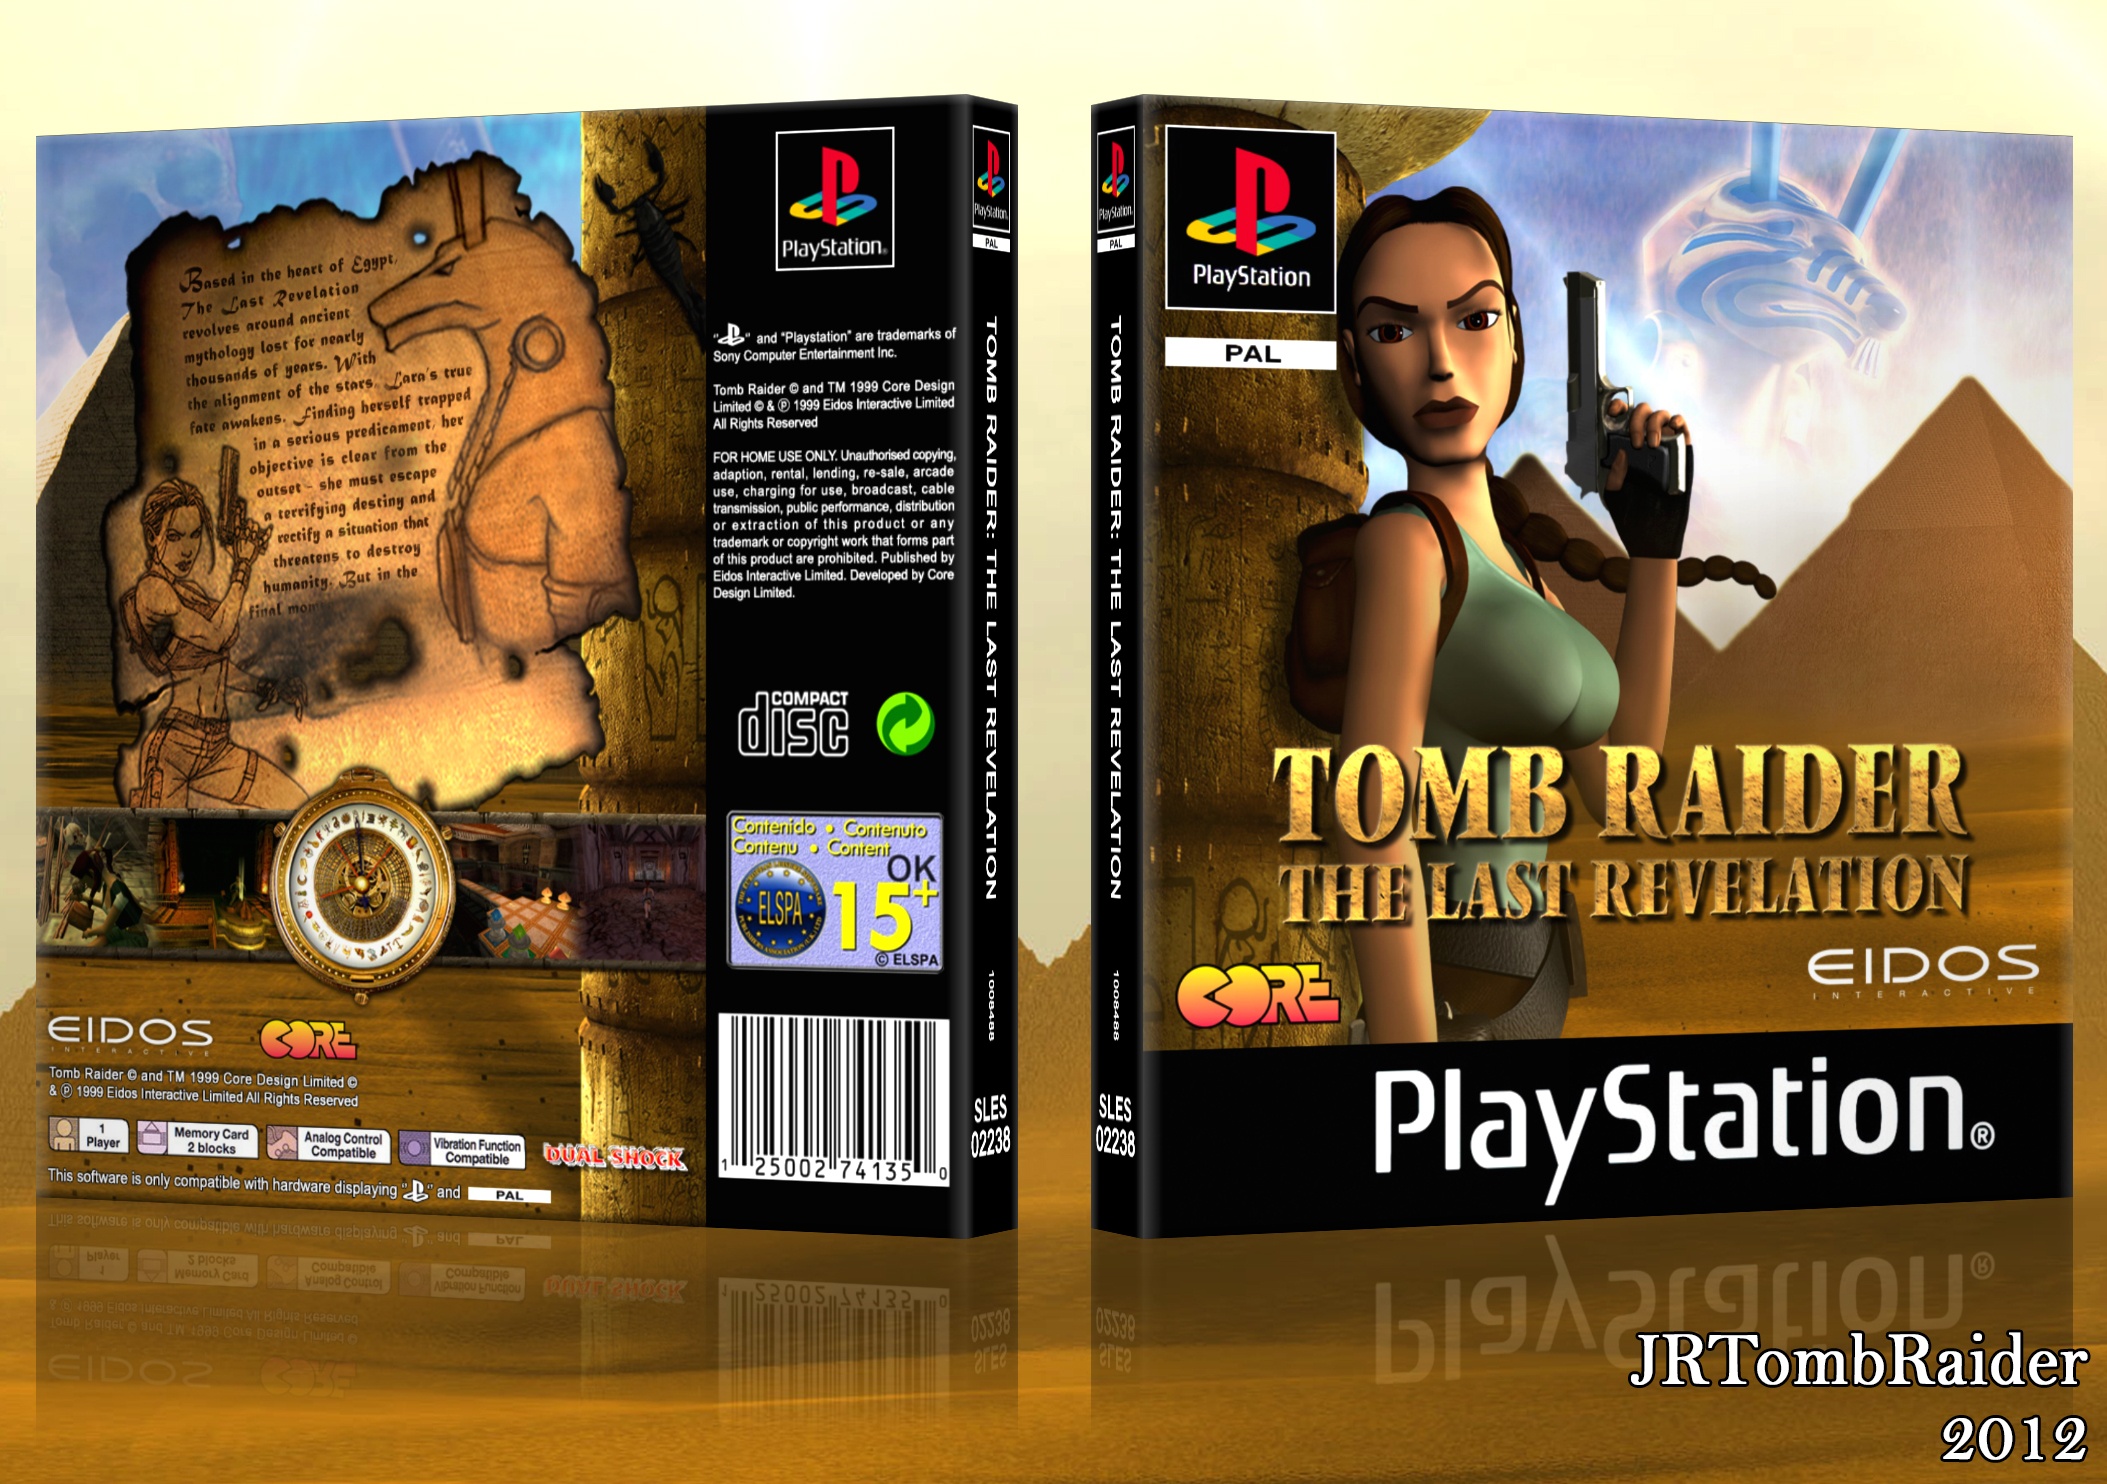 Tomb Raider: The Last Revelation box cover